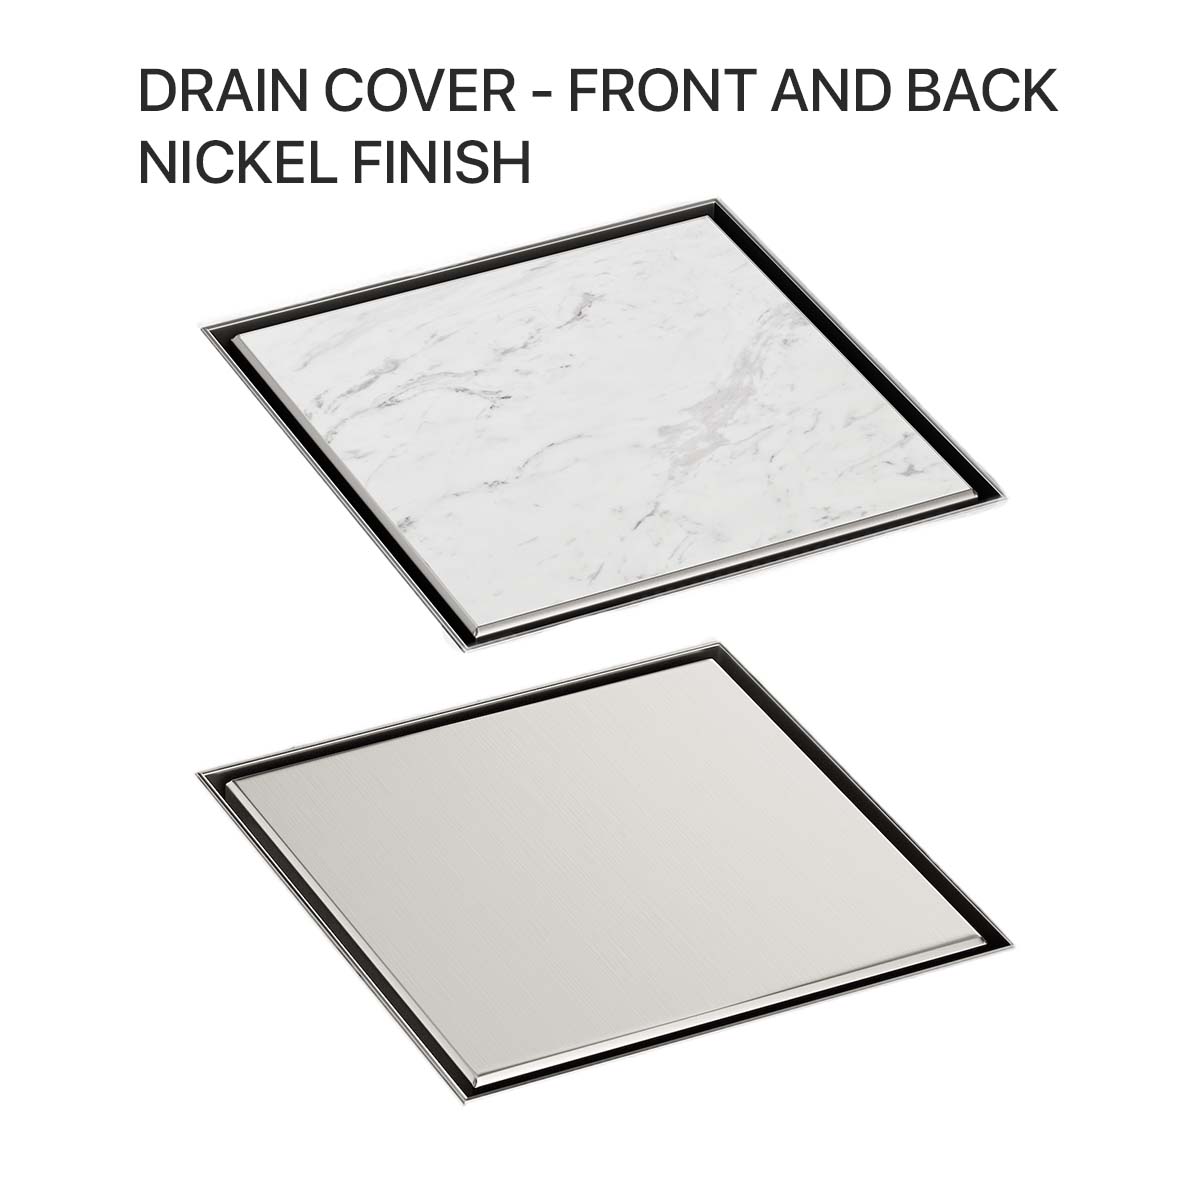 sharpdrain square drain covers nickel